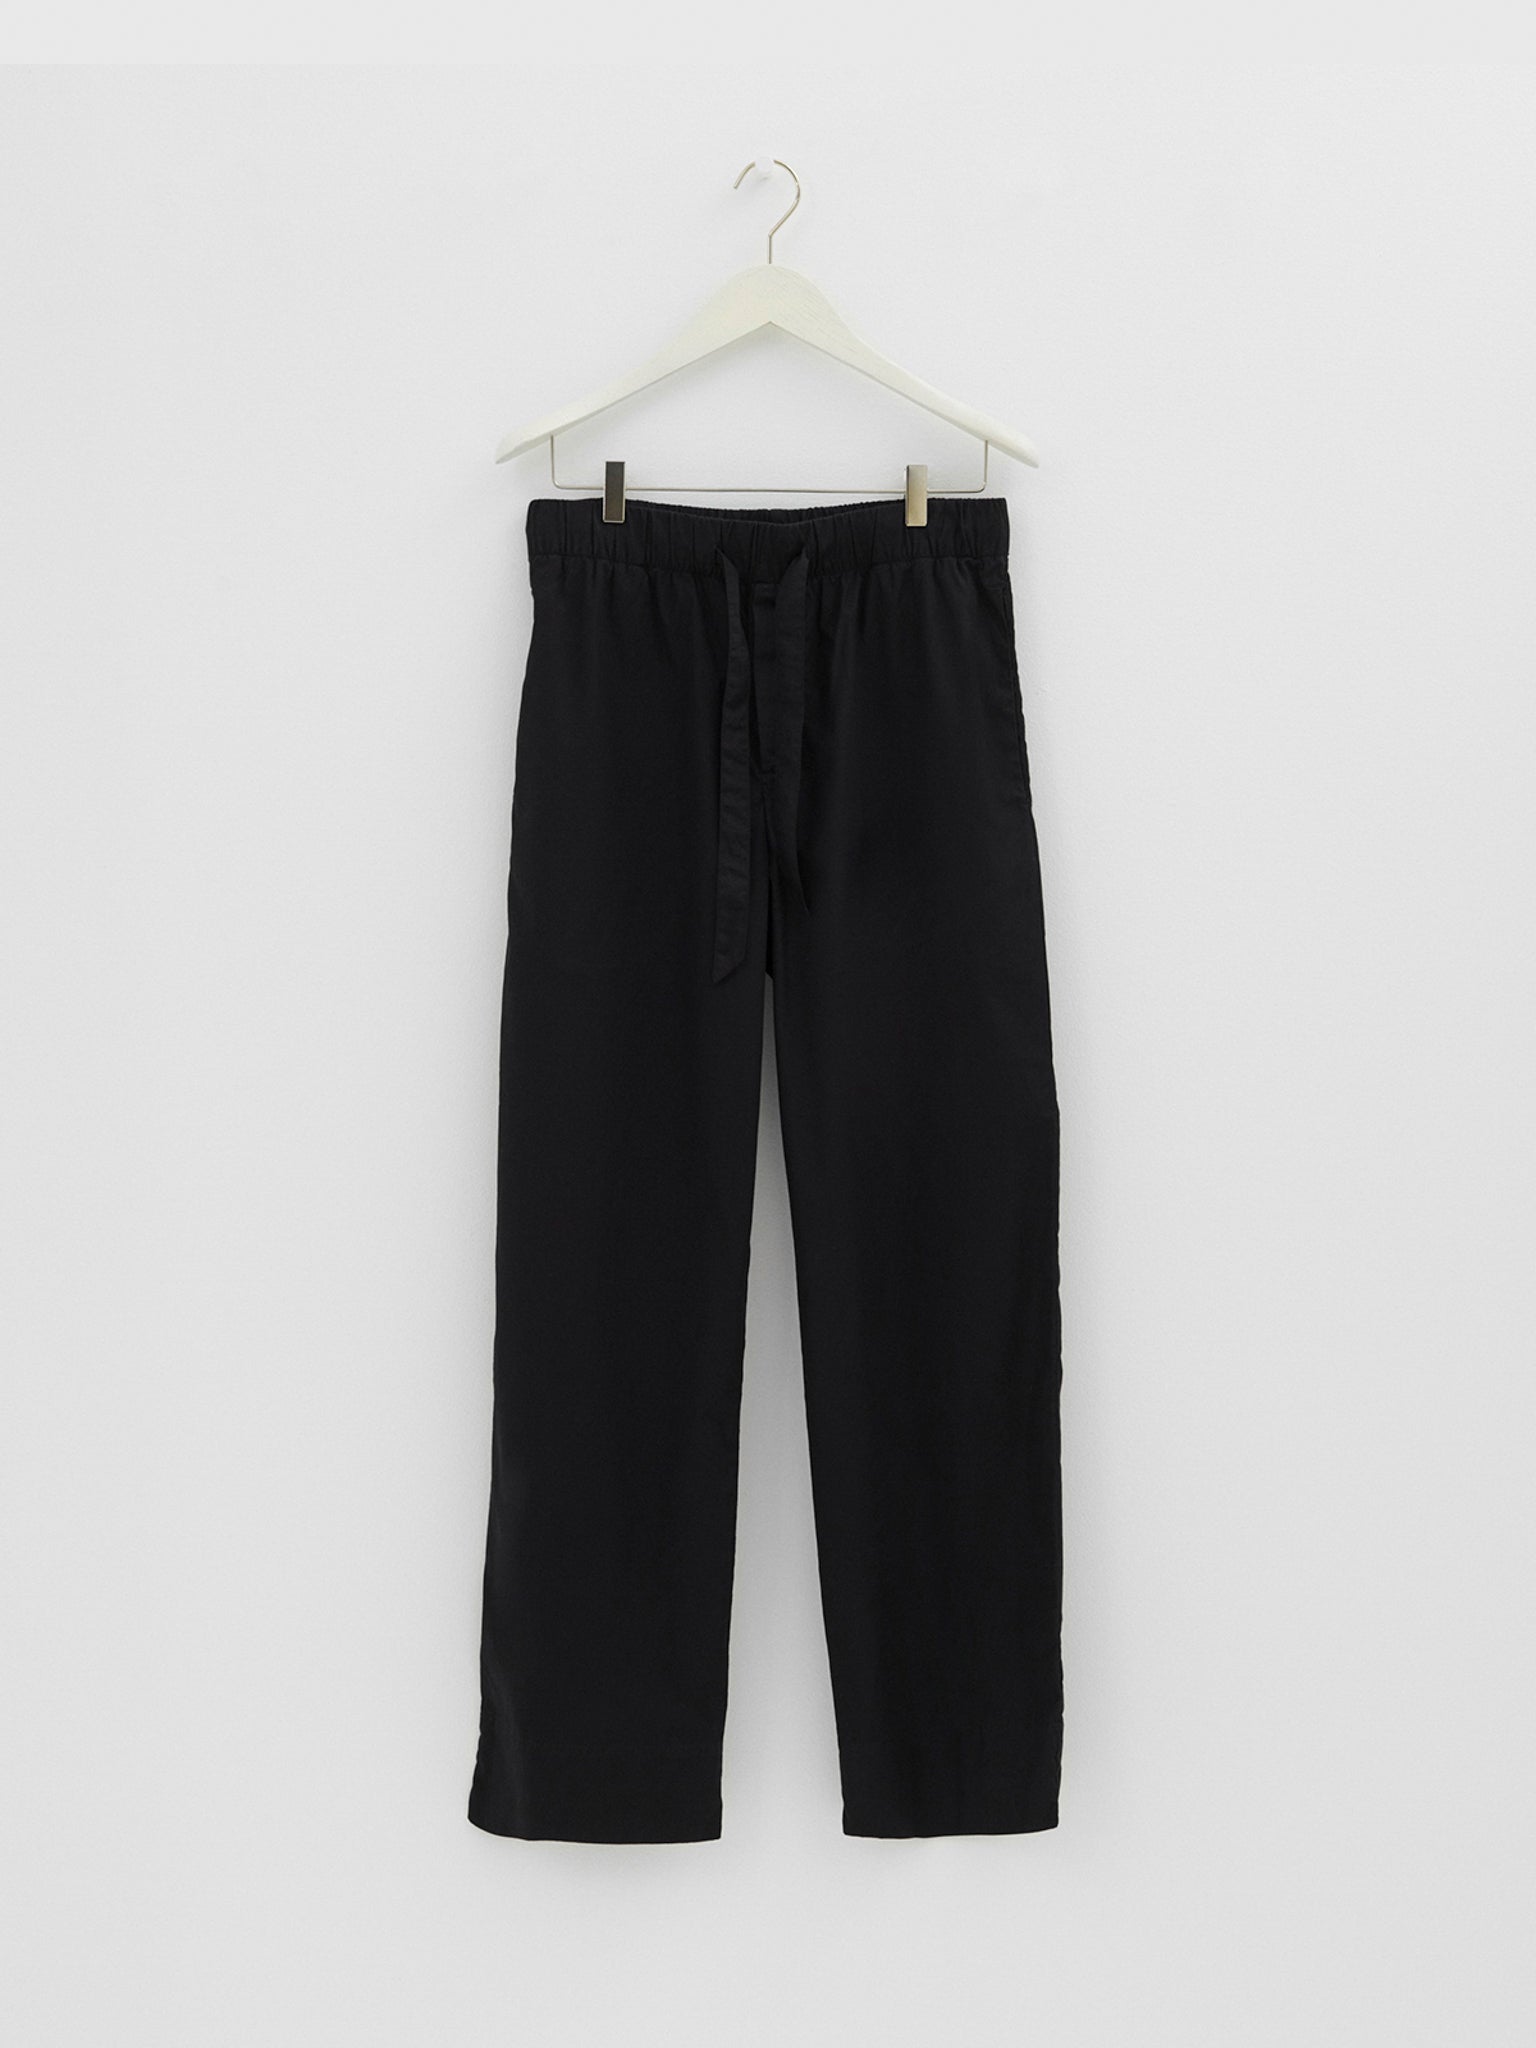 Tekla - Poplin Pyjamas Pants in All Black